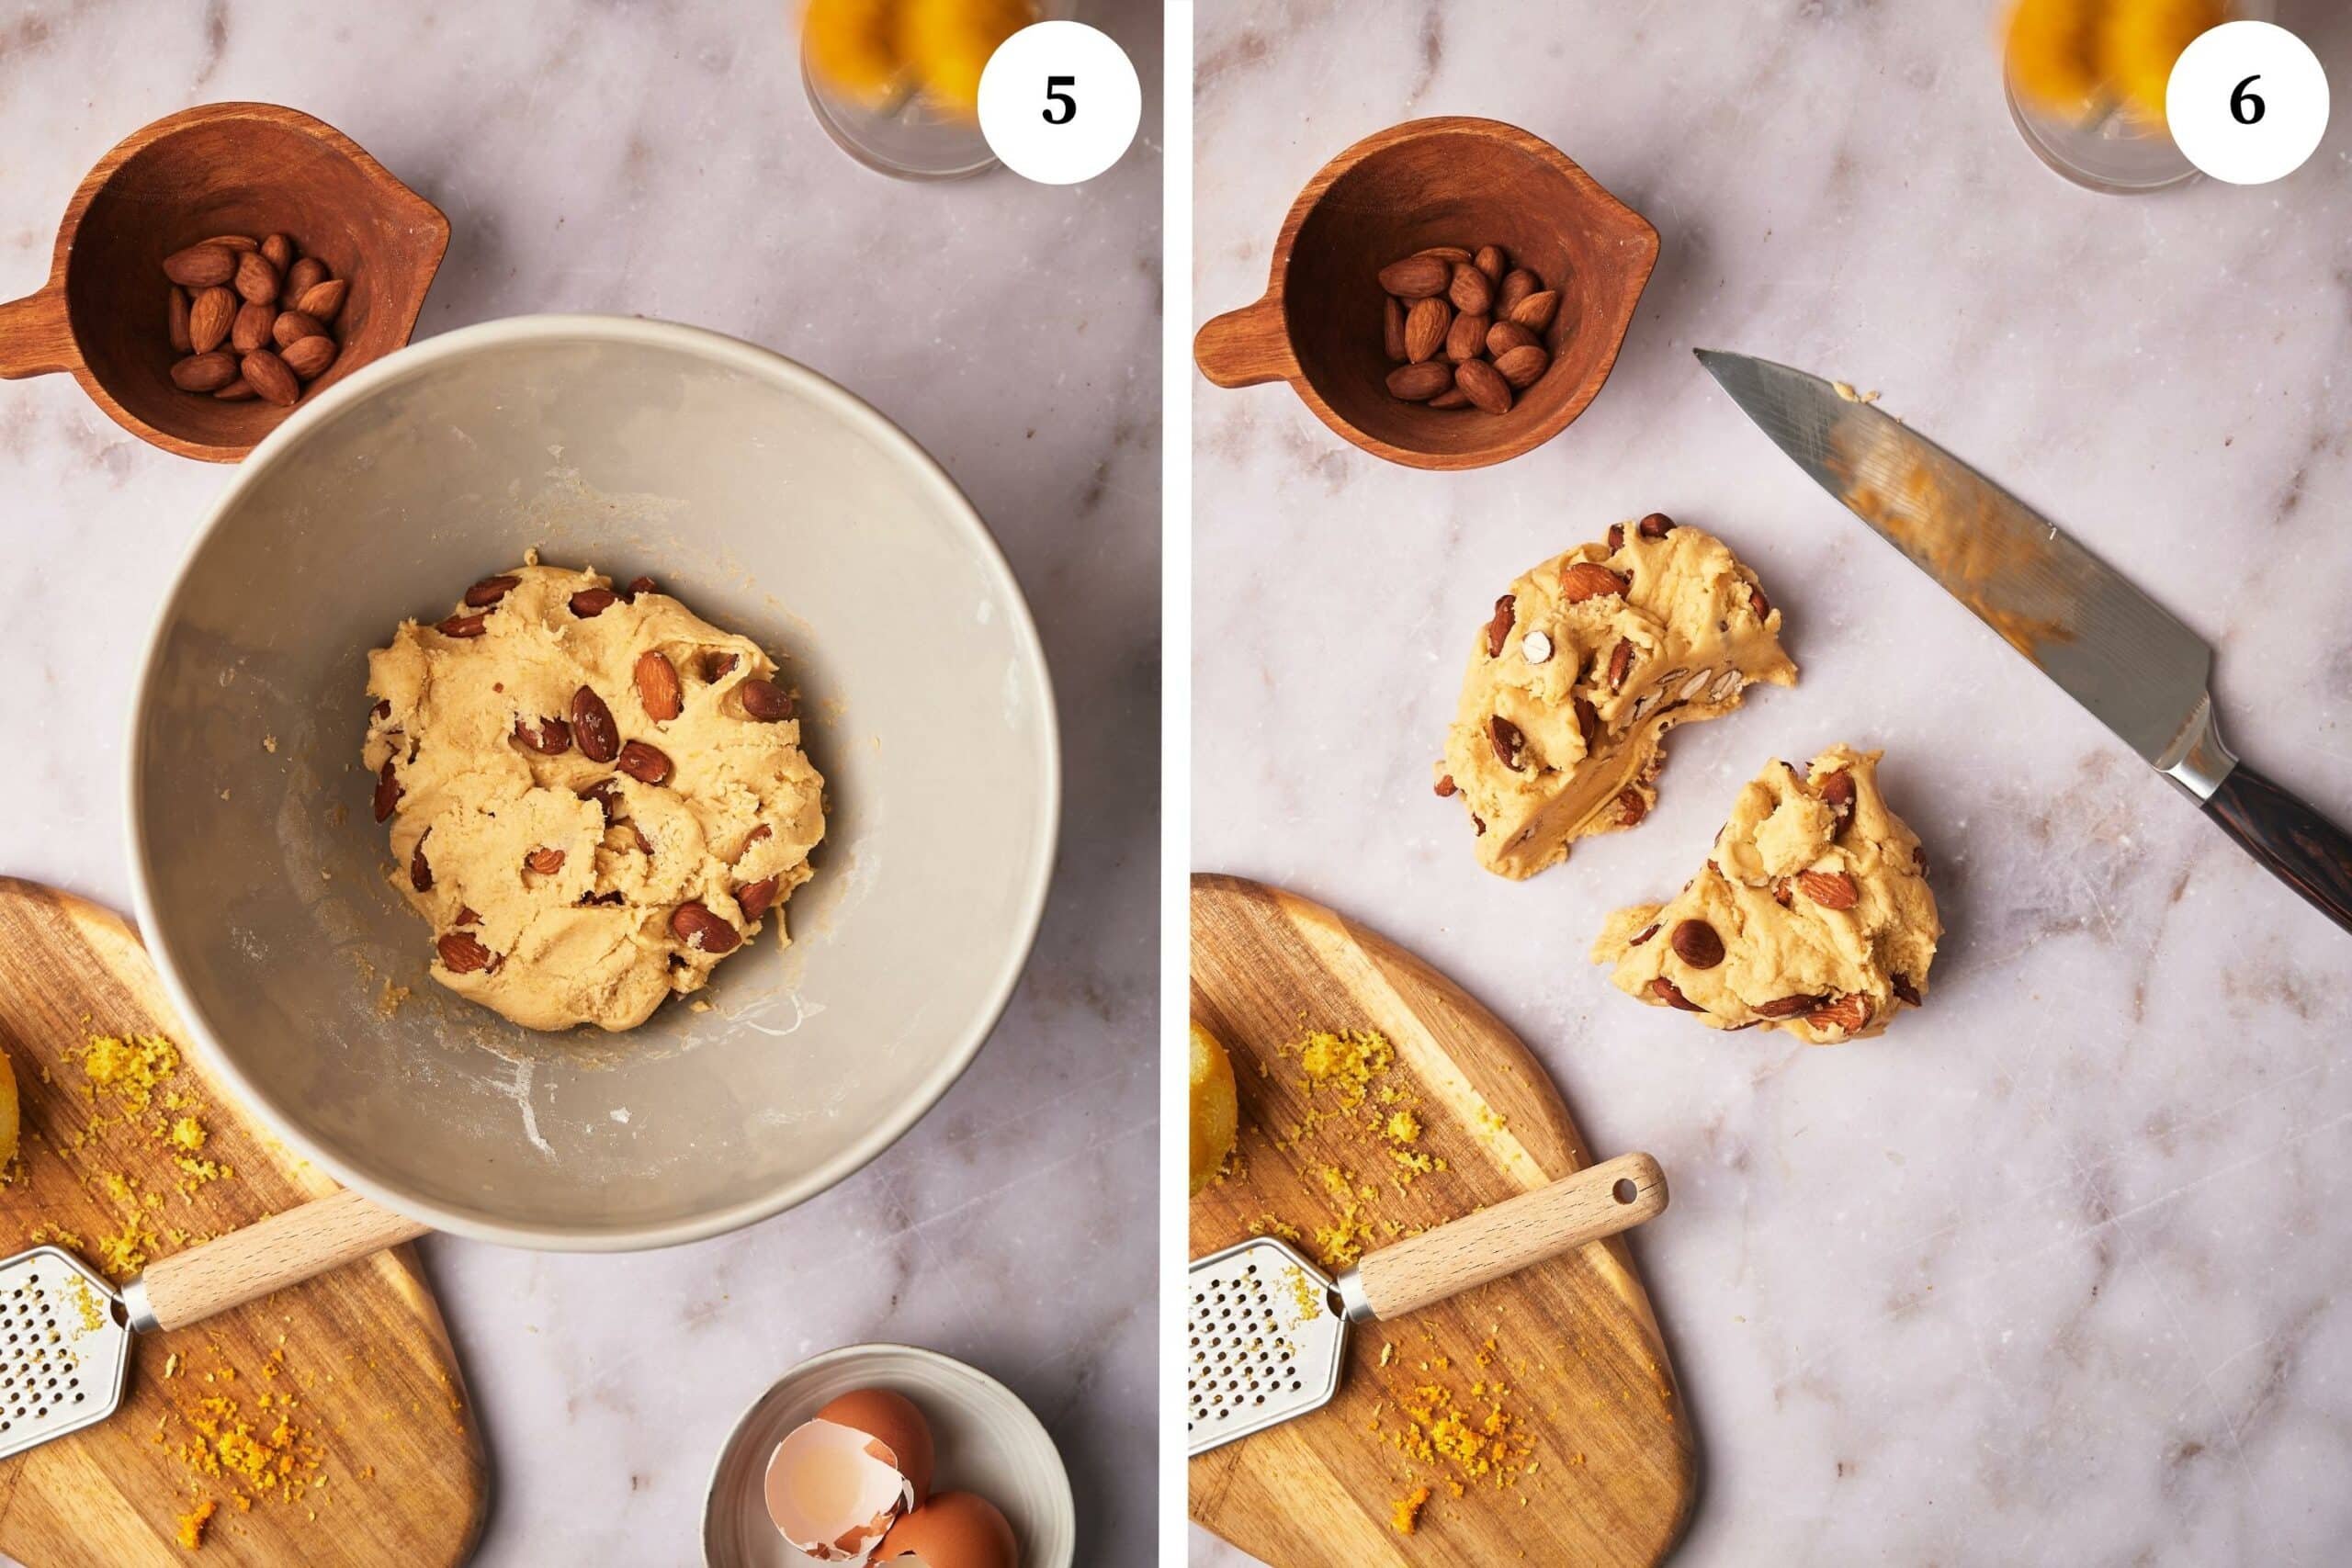 add the almonds to the dough to make the biscotti recipe